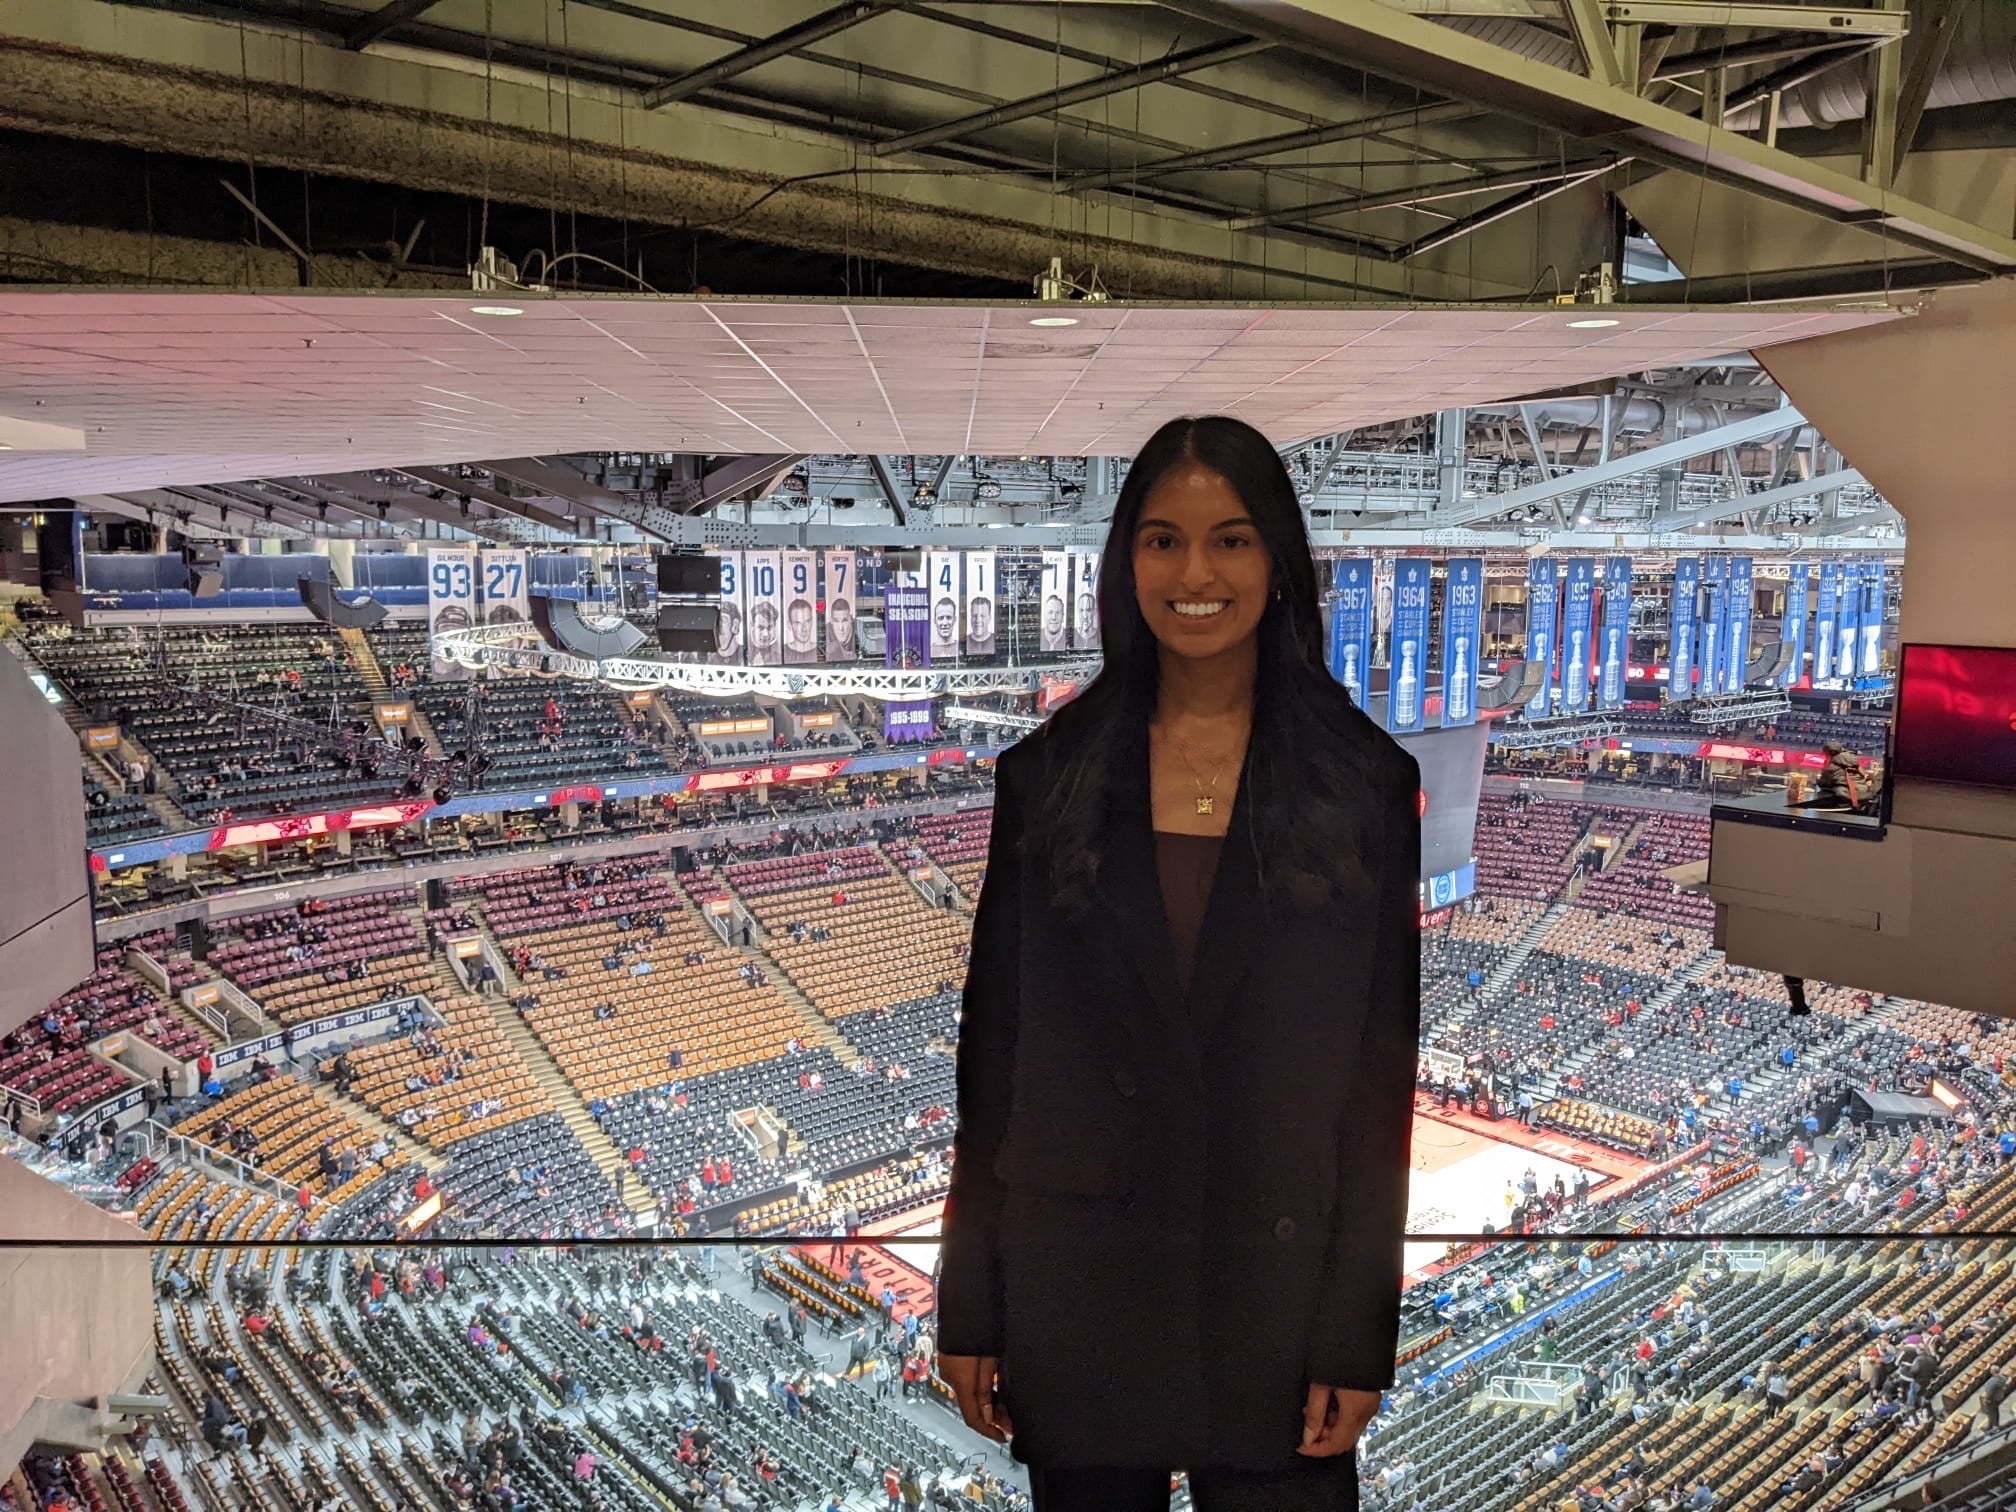 A photo of Riana standing inside the Toronto Raptors basketball arena.